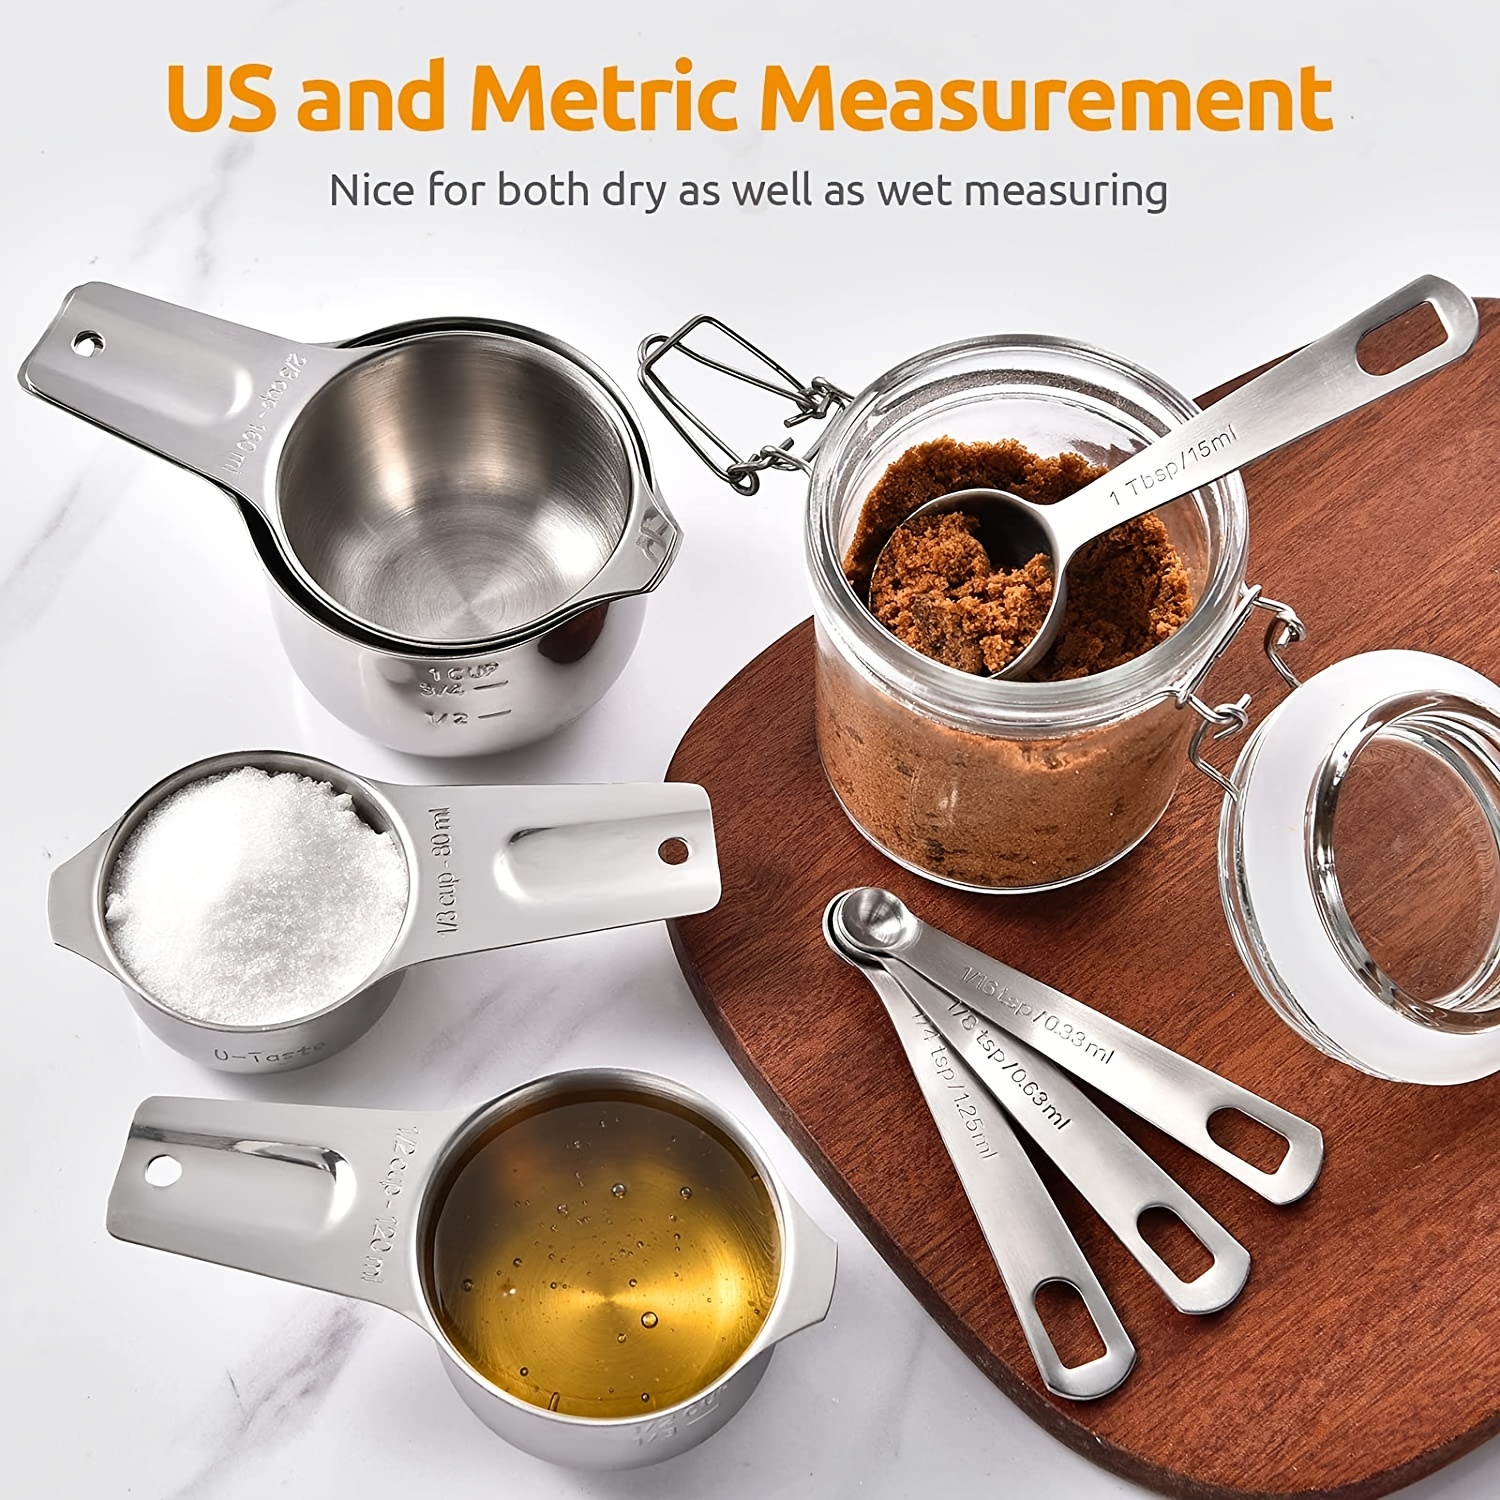 U-Taste 7 -Piece Stainless Steel Measuring Cup And Spoon Set